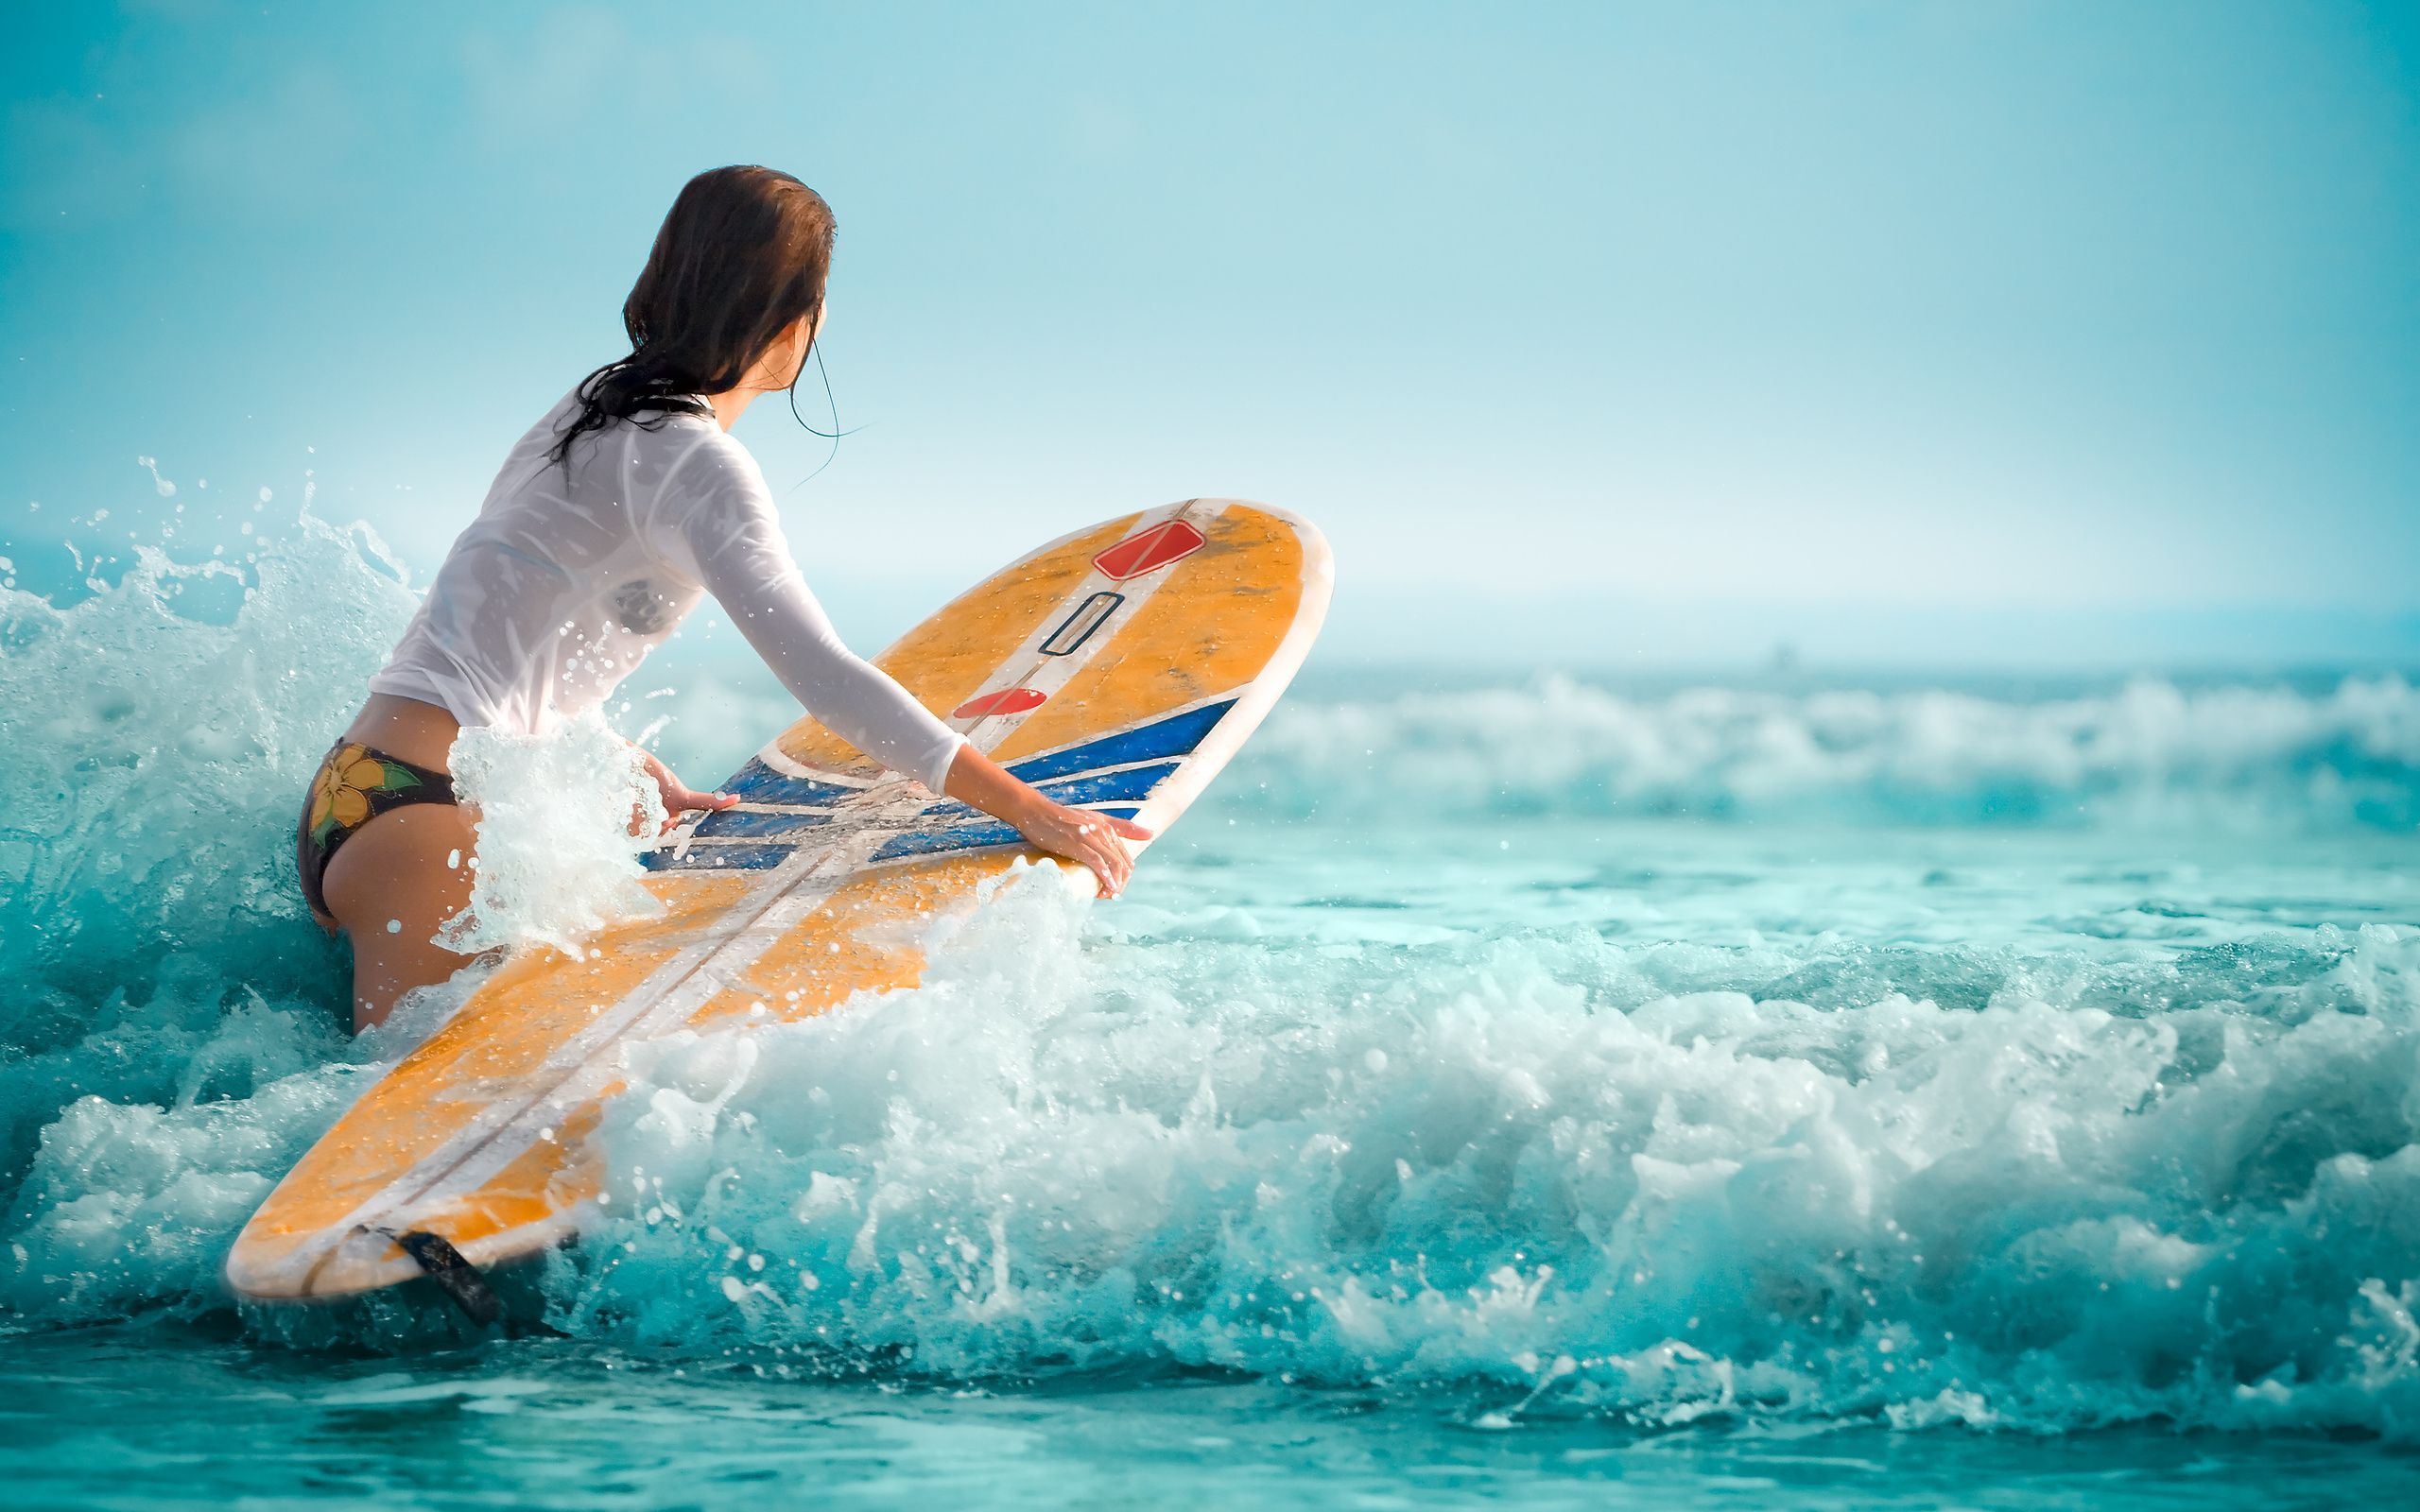 Hot surfing girl full hd wallpaper | Wallpapers, Backgrounds ...